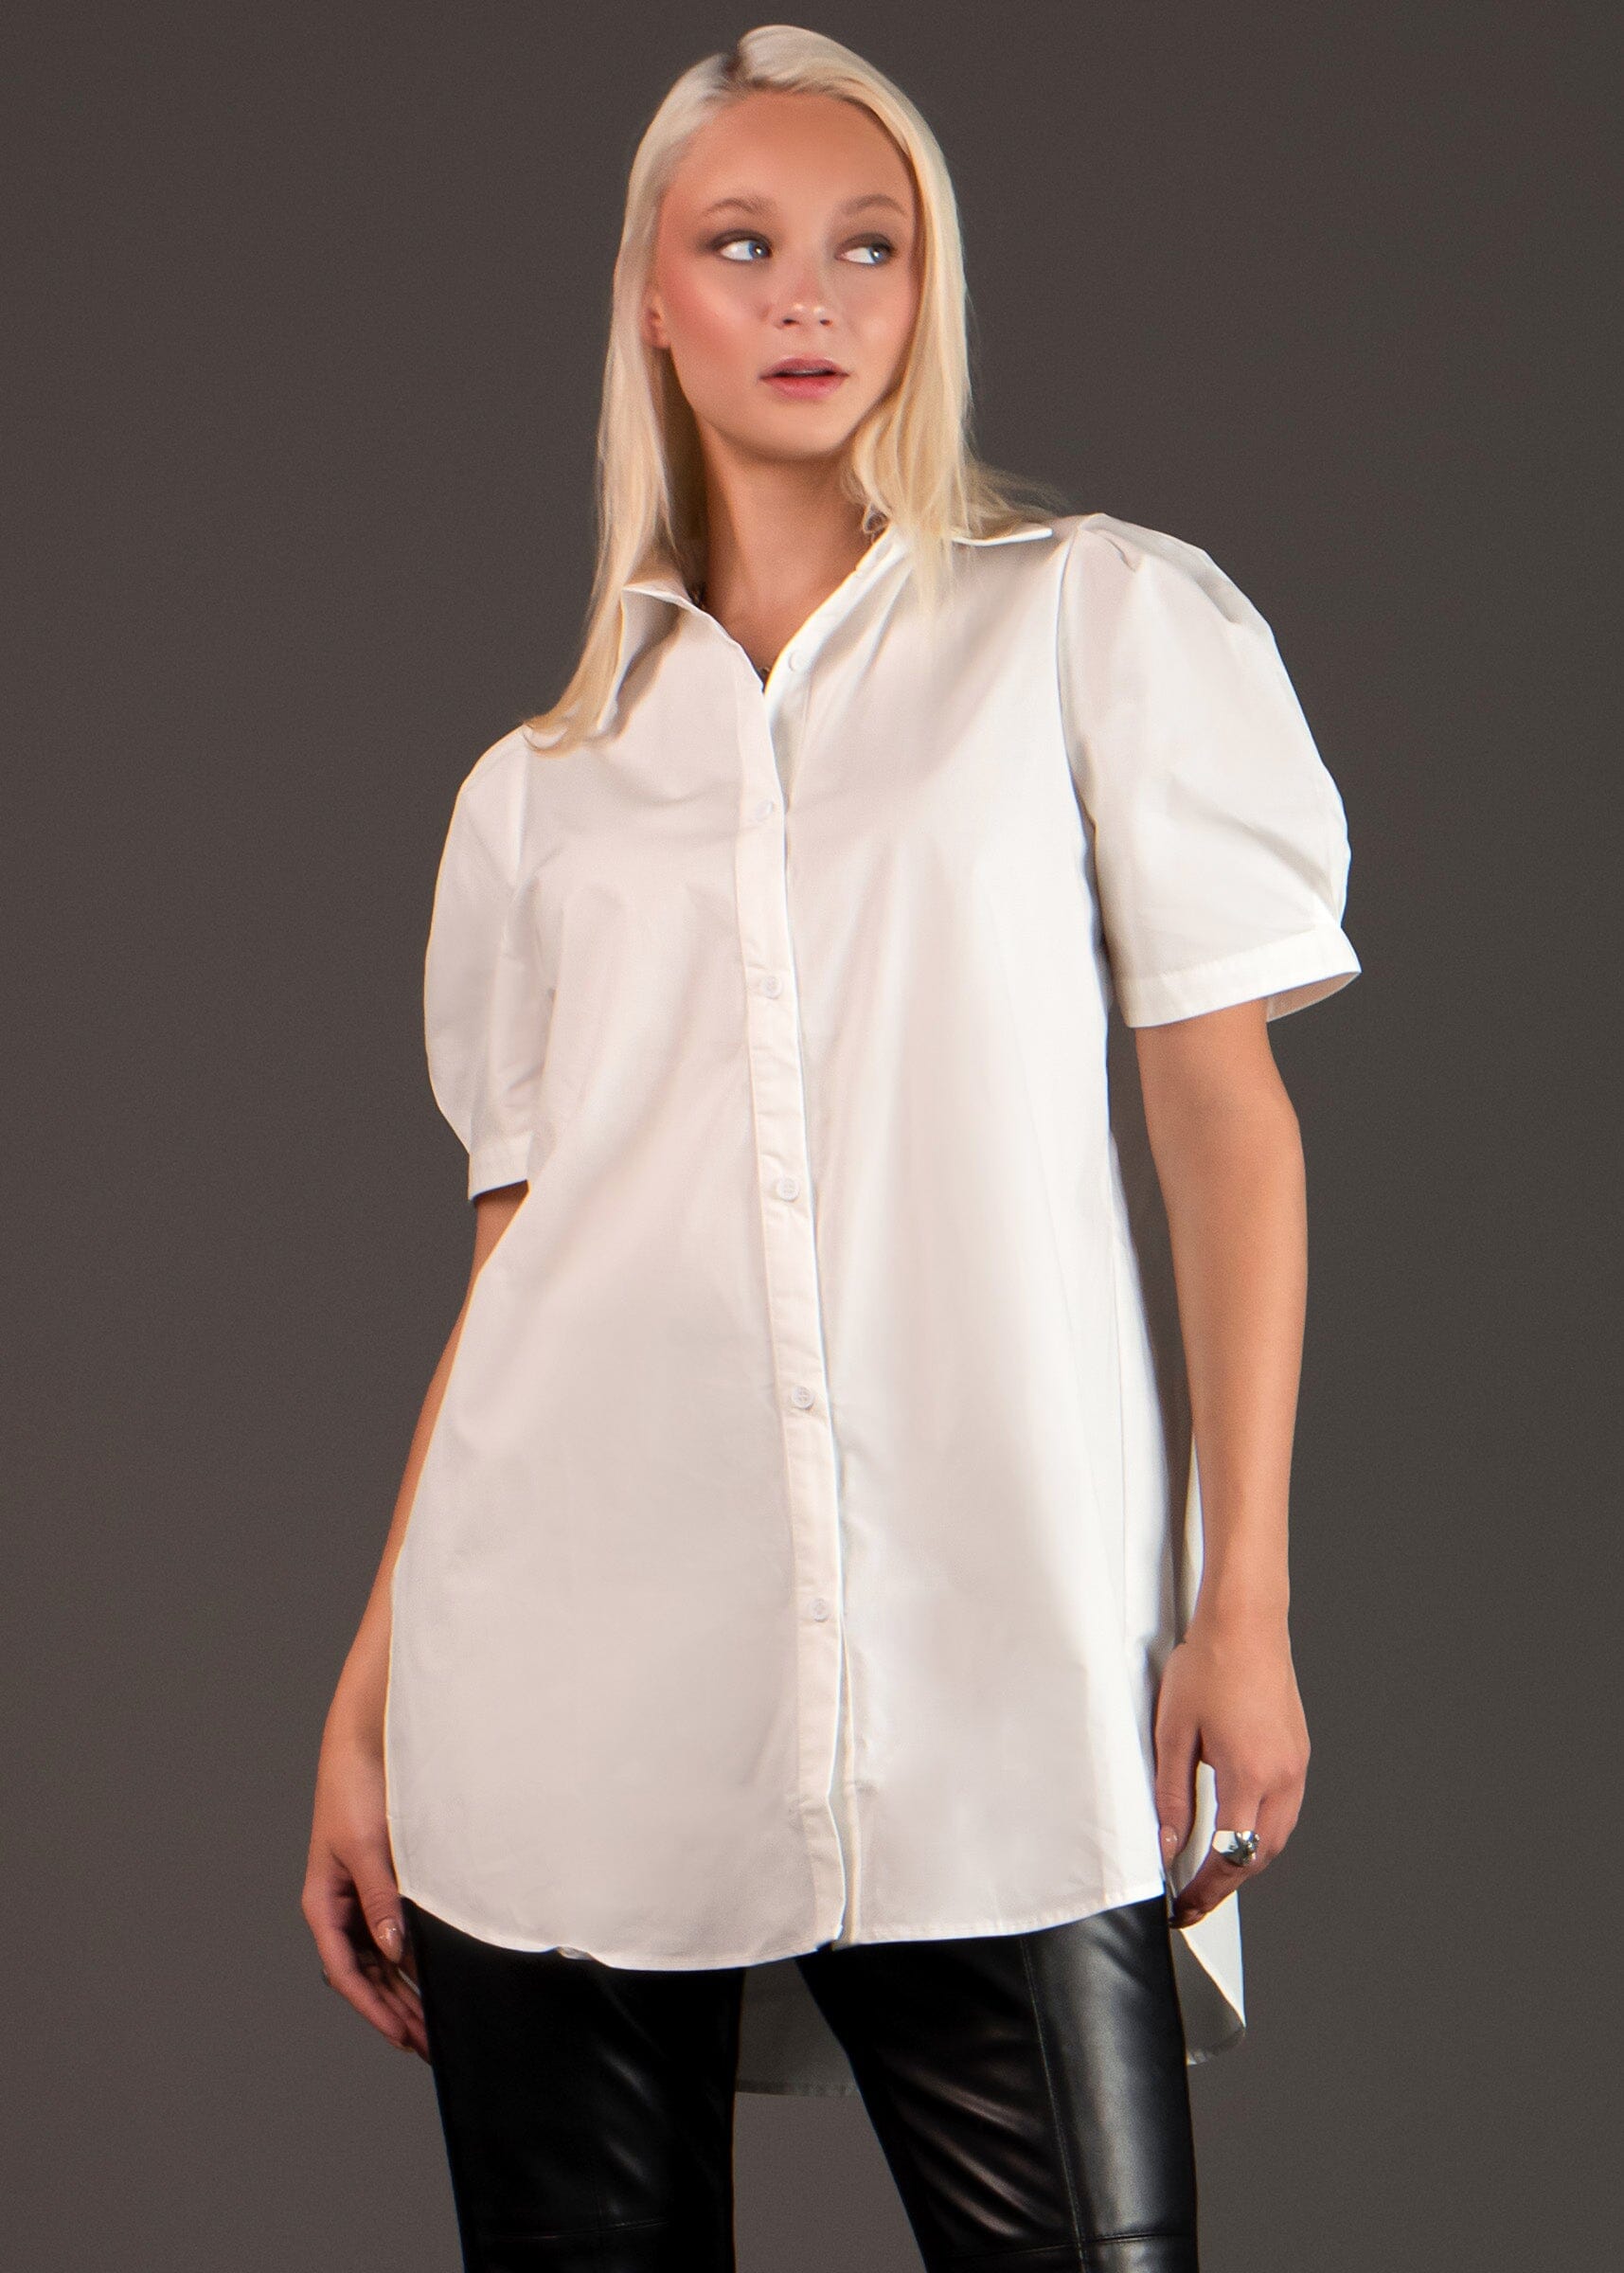 Long White Dress Shirt Tee Blouses Kate Hewko 